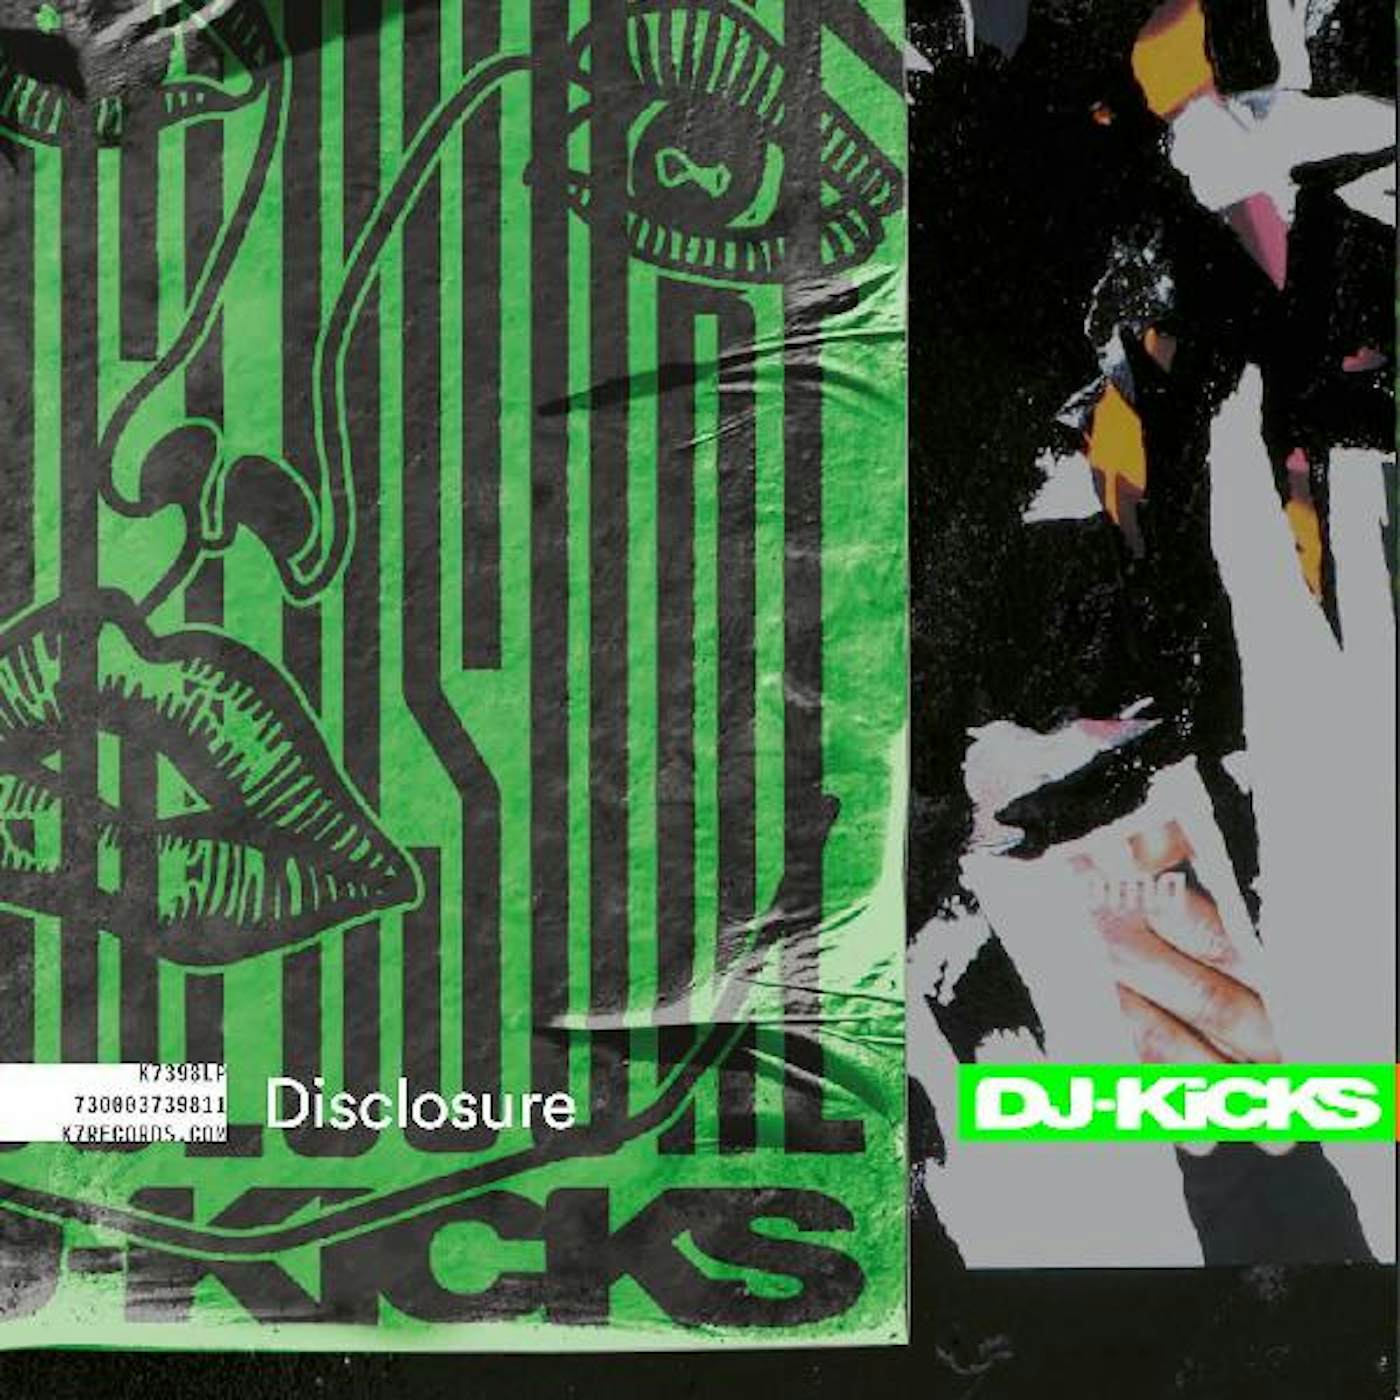 DISCLOSURE DJ-KICKS (DL CARD) Vinyl Record